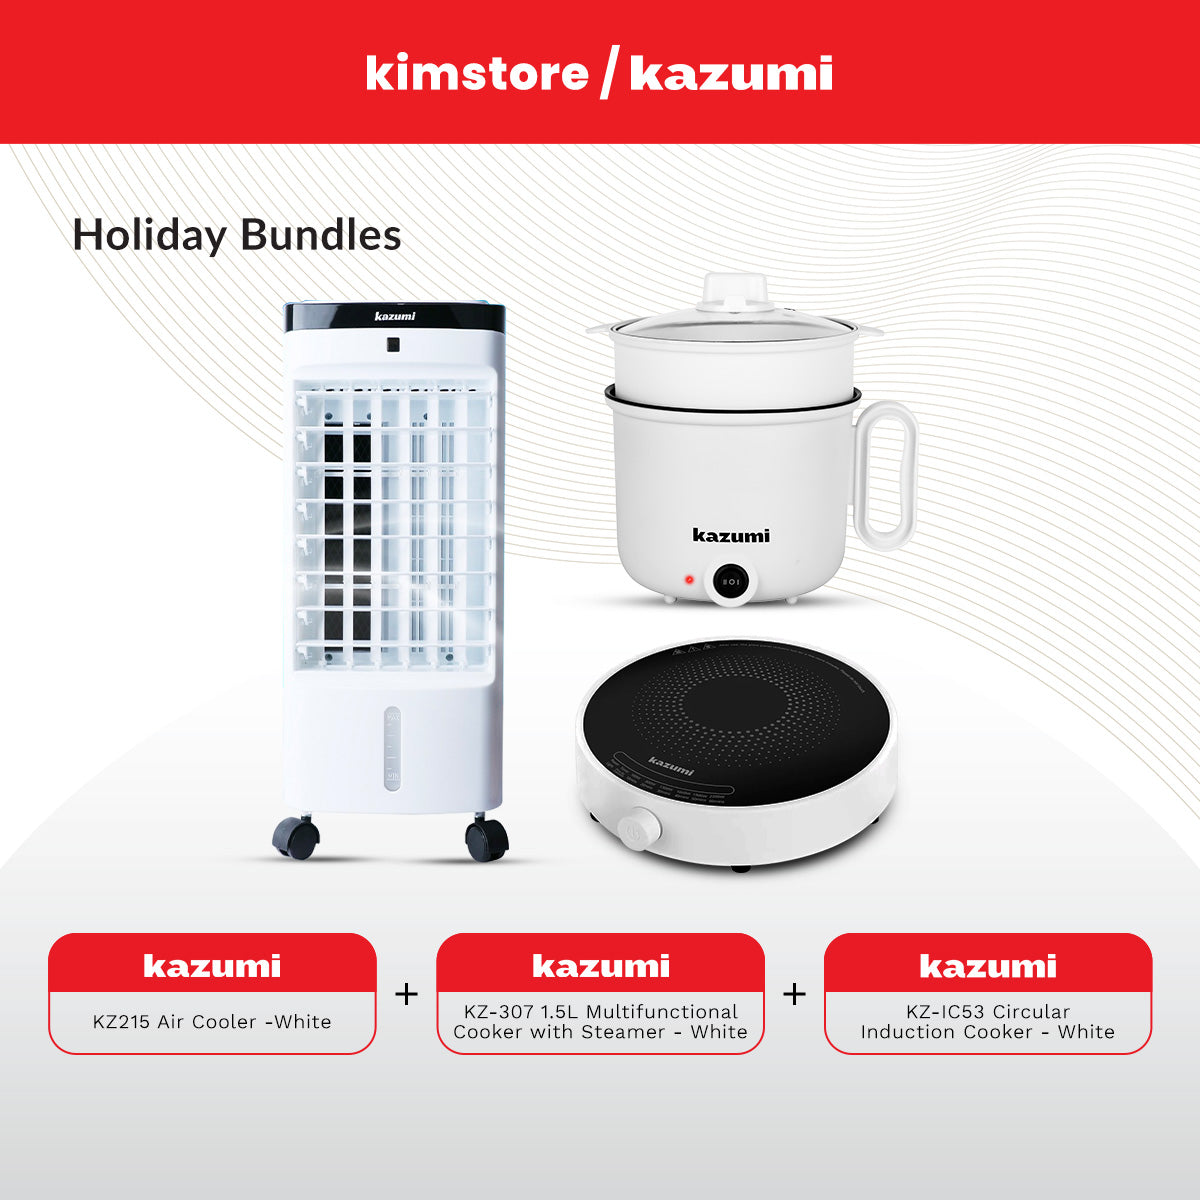 Holiday Bundle: Kazumi KZ215 Air Cooler + Kazumi KZ-307 1.5L Multifunctional Cooker with Steamer + Kazumi KZ-IC53 Circular Induction Cooker